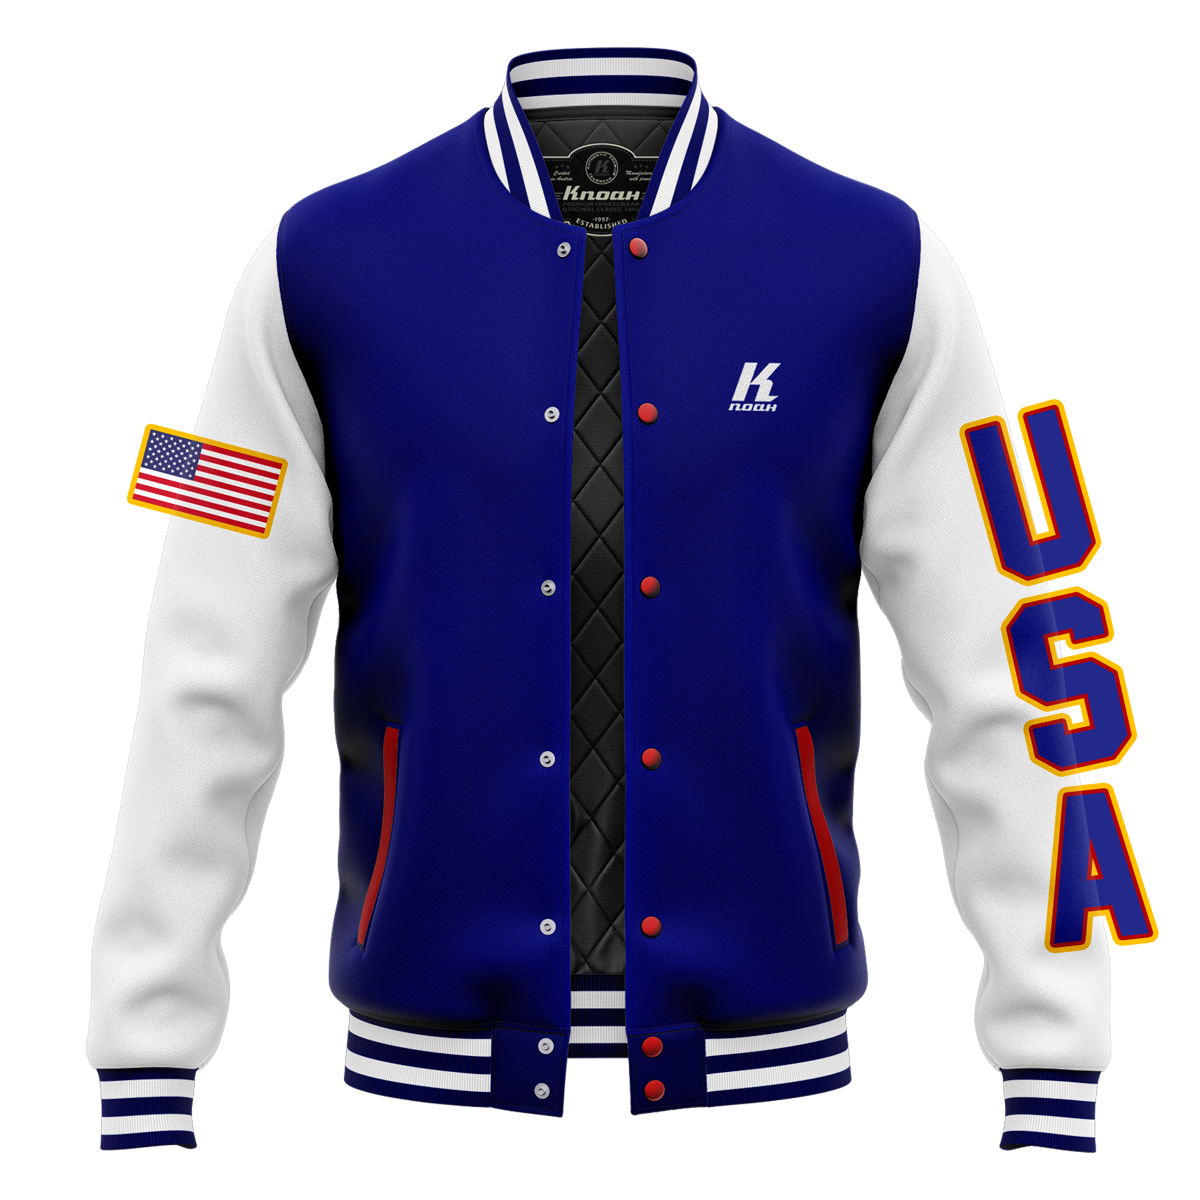 Day 13: "Stars and Stripes" Authentic Varsity Jacket